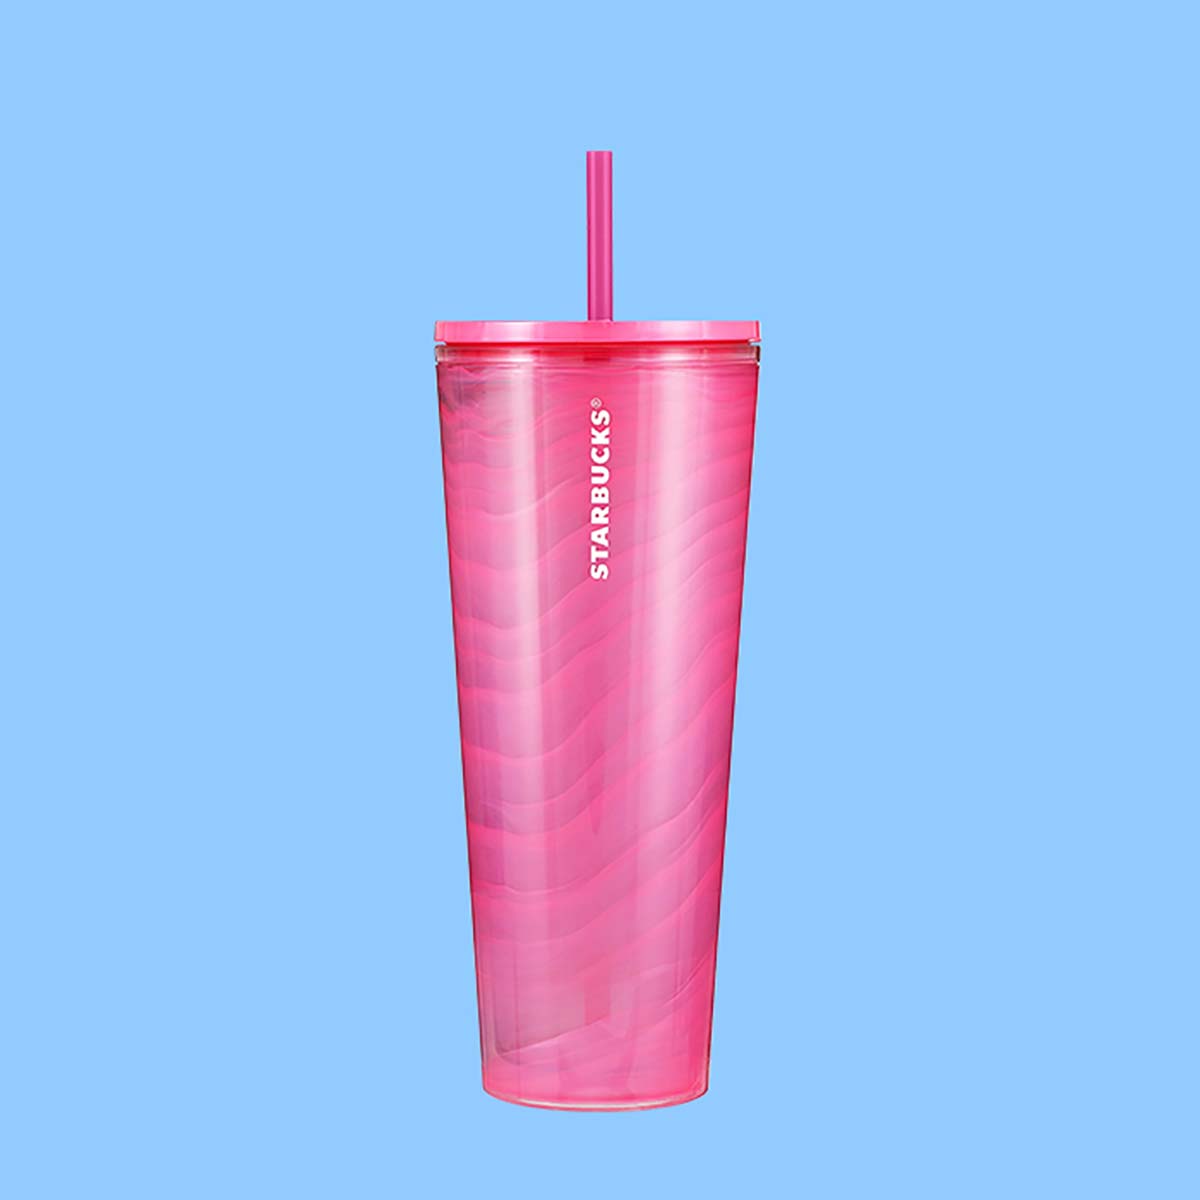 Starbucks Bubblegum Pink Striped Cold Cup (24 oz).